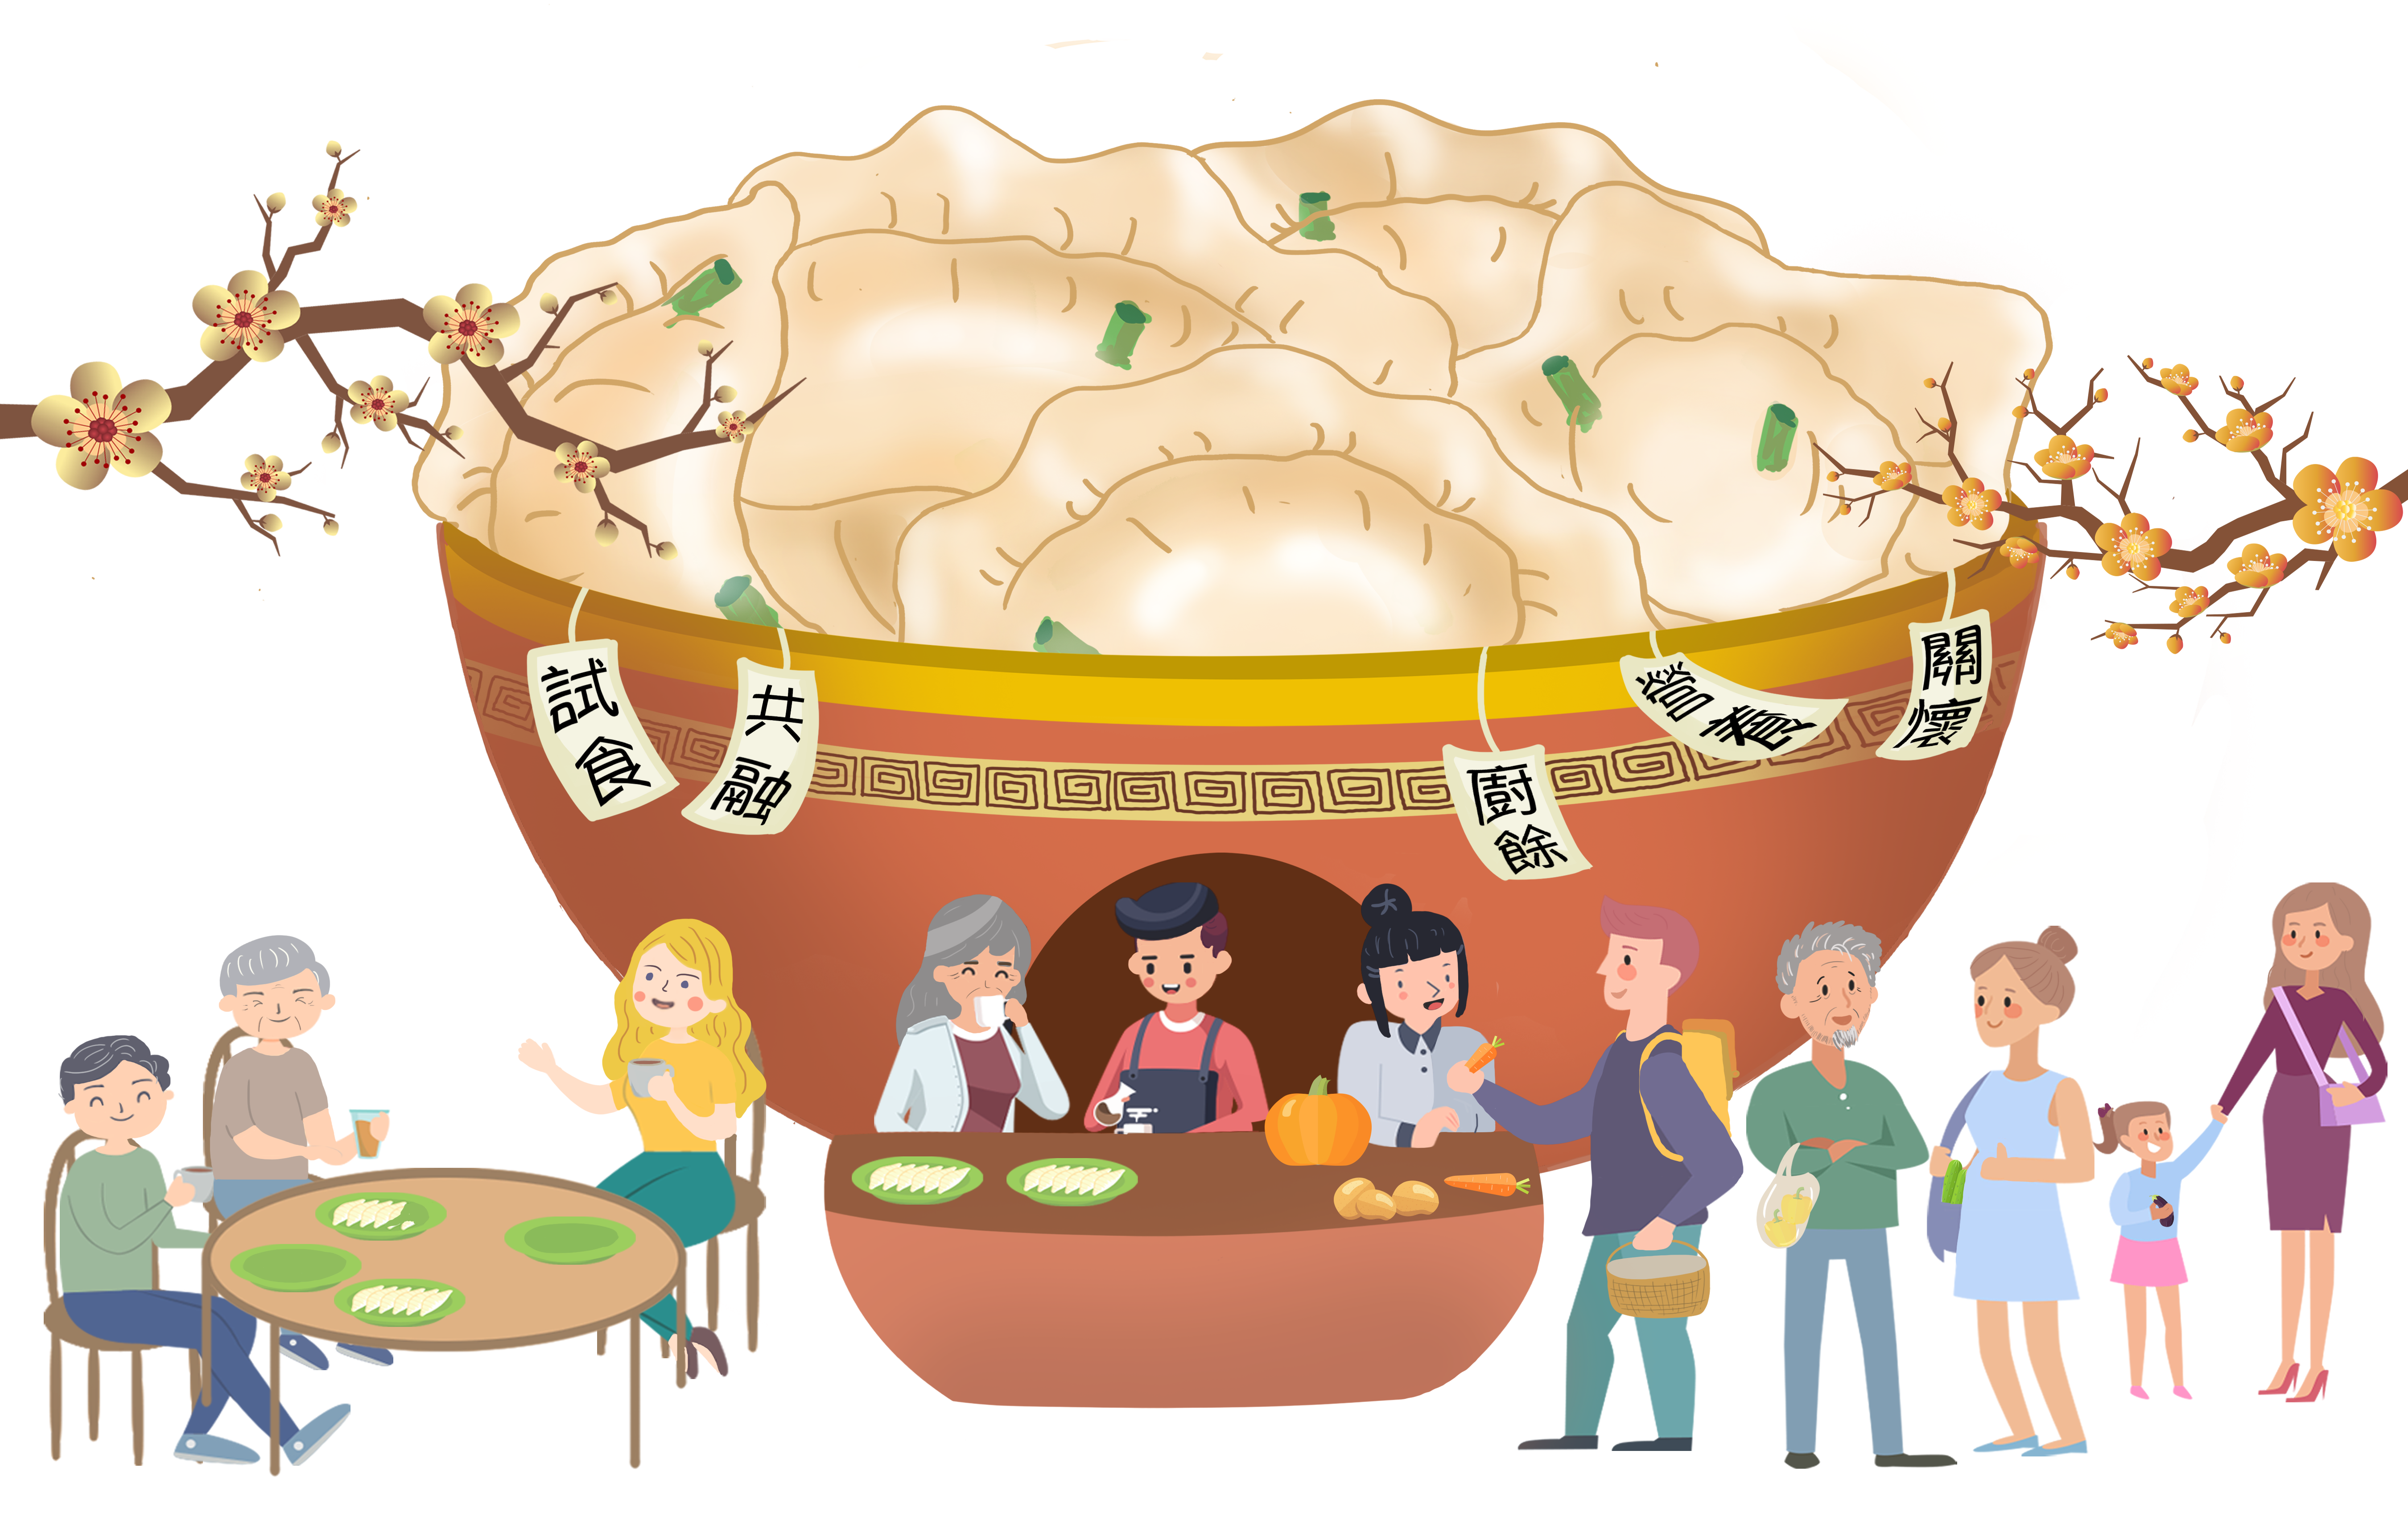 賽馬會跨代學習體驗計劃-跨代-學習-體驗-賽馬會-IGLE-Jockey-Club-intergeneration-intergenerational-learning-experience-programme-food-nutrition-foodnutrition-cooking-dumplings-eat-diet